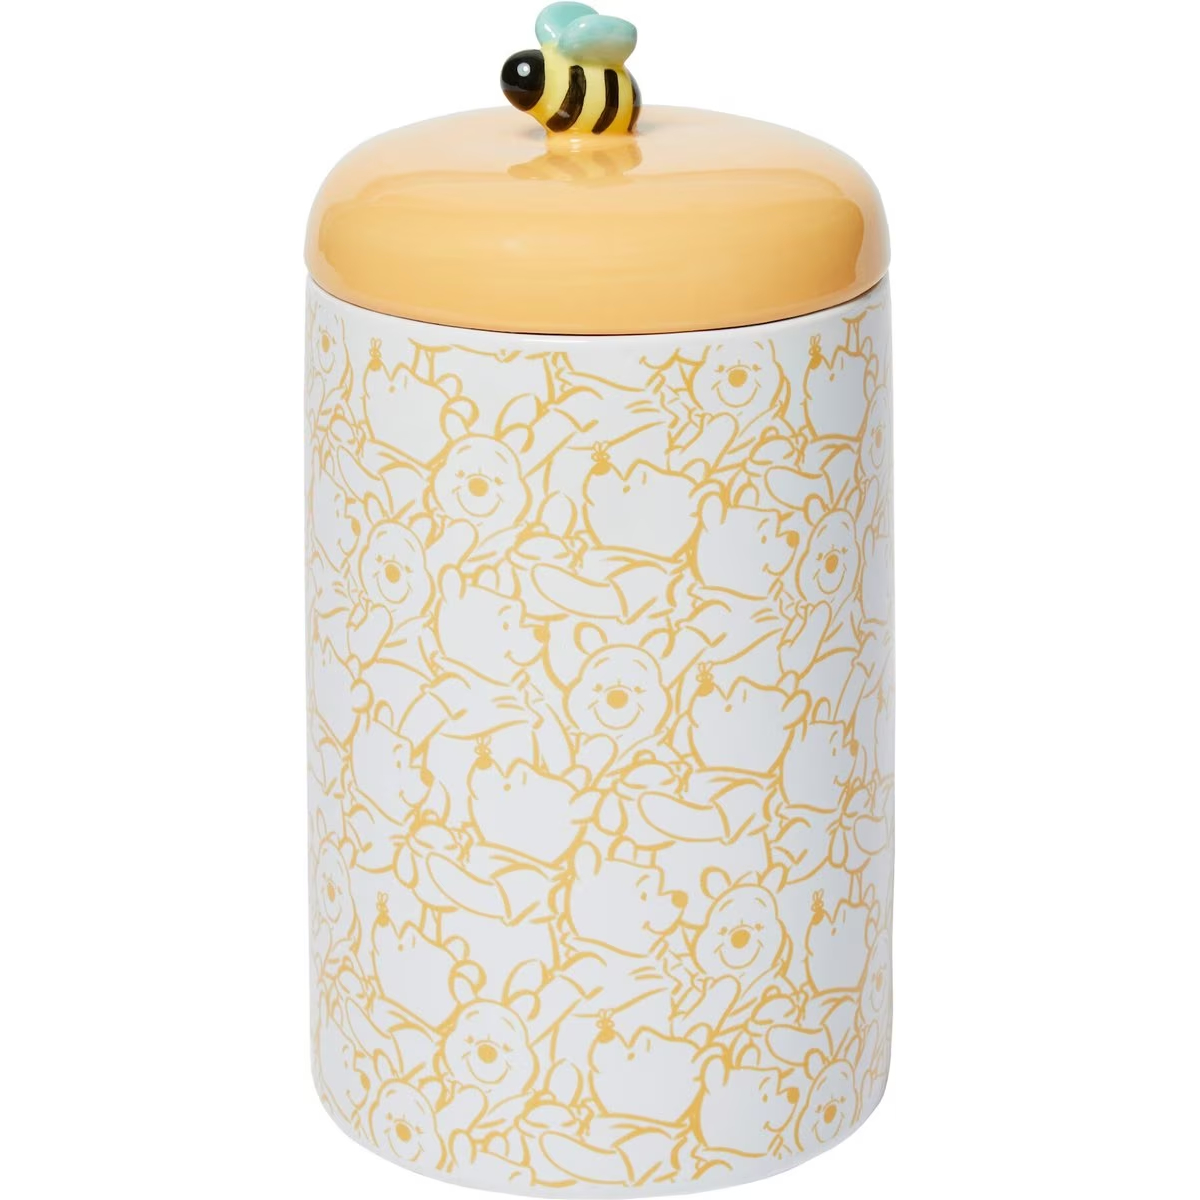 Disney Winnie the Pooh Yellow Ceramic Dog & Cat Treat Jar